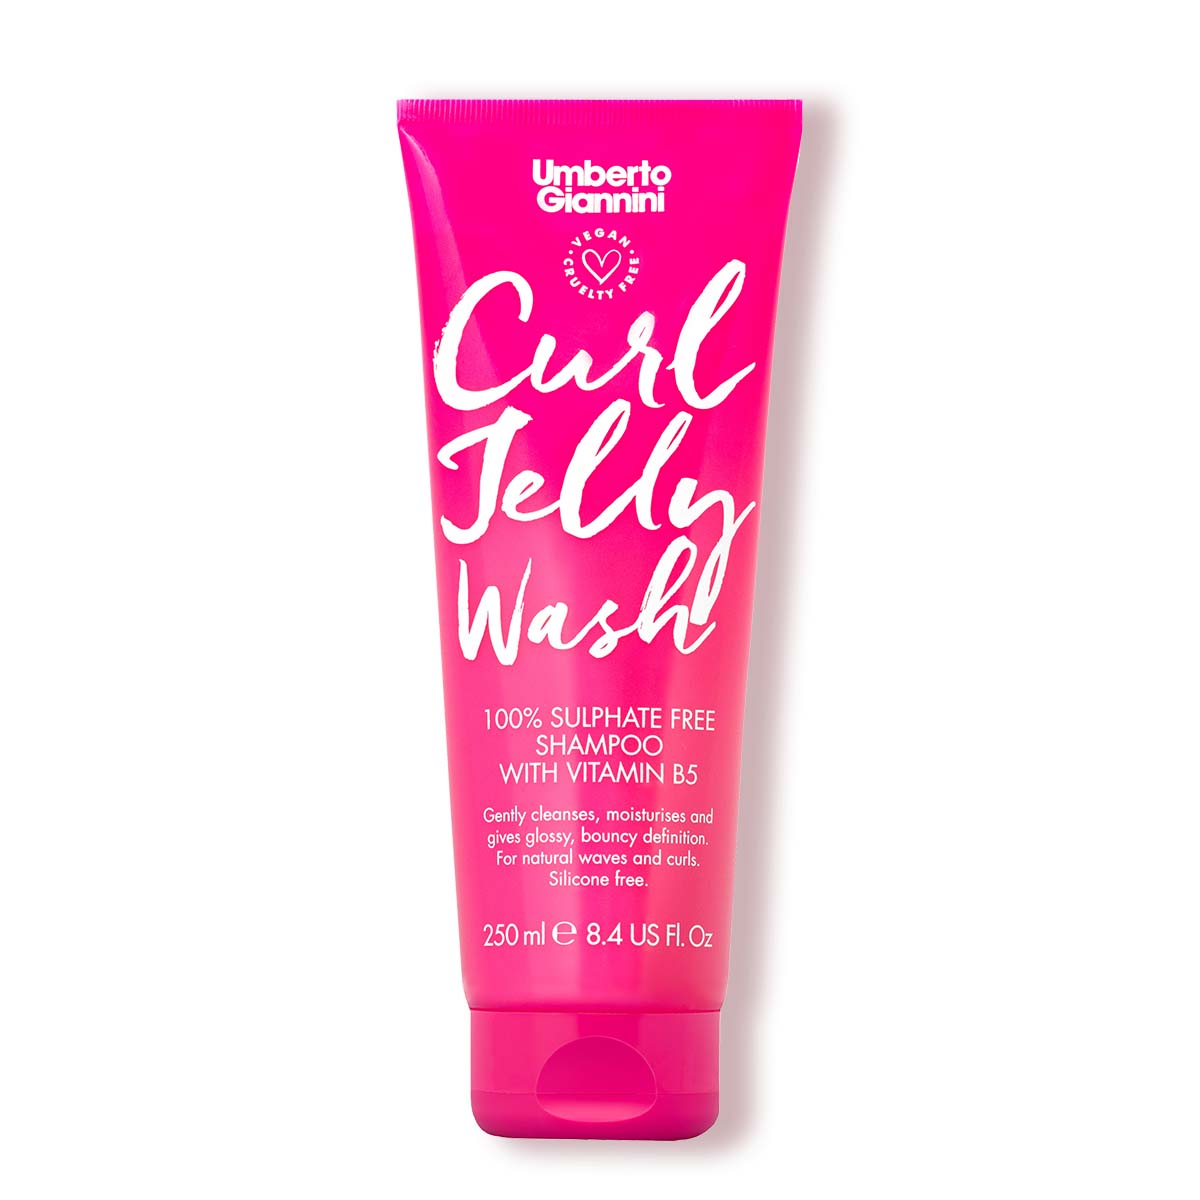 Curl Jelly Wash - Vegan Shampoo